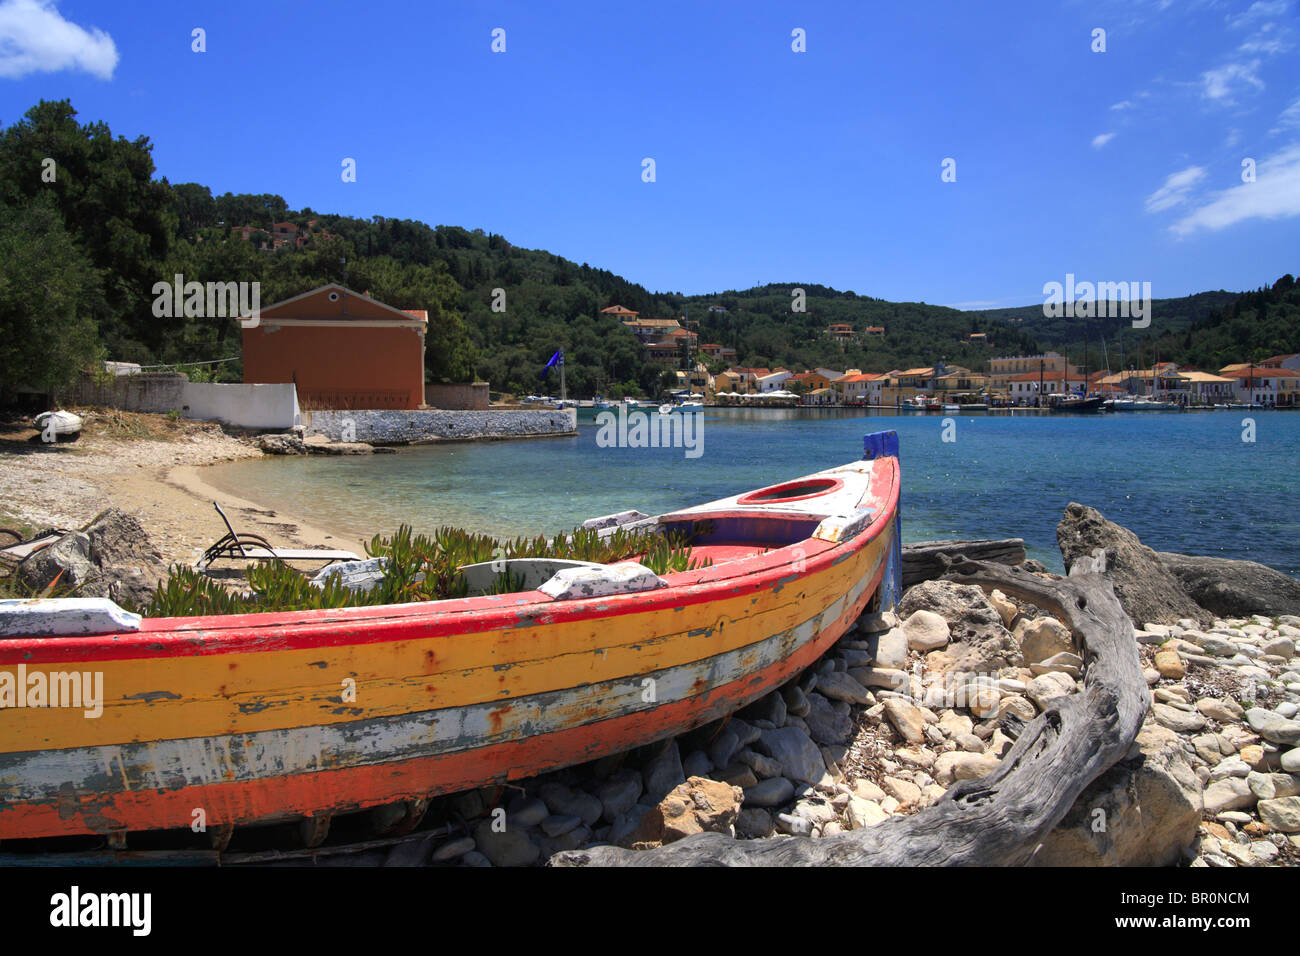 Lakka harbour Paxos island, Ionian Islands, Greece. An undiscovered Greek holiday destination. Stock Photo